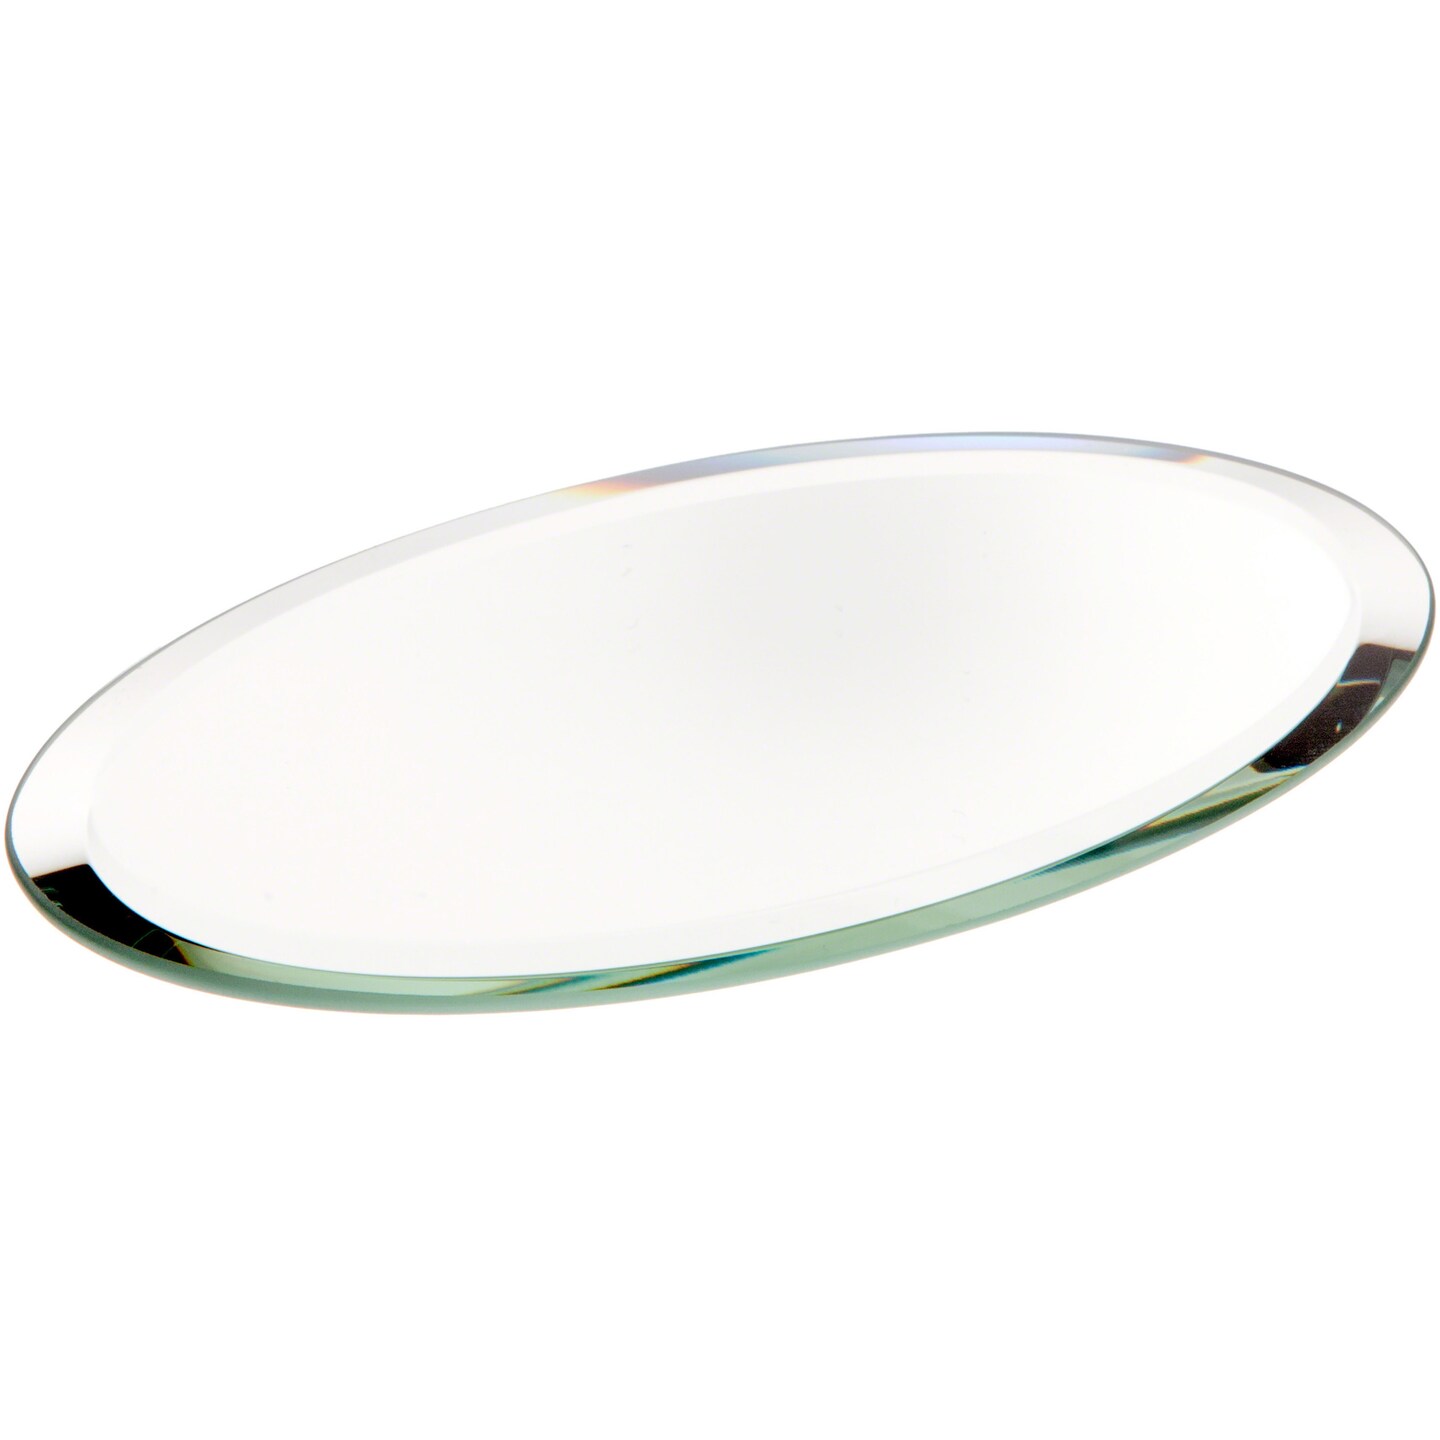 Plymor Oval 3mm Beveled Glass Mirror, 3 inch x 5 inch